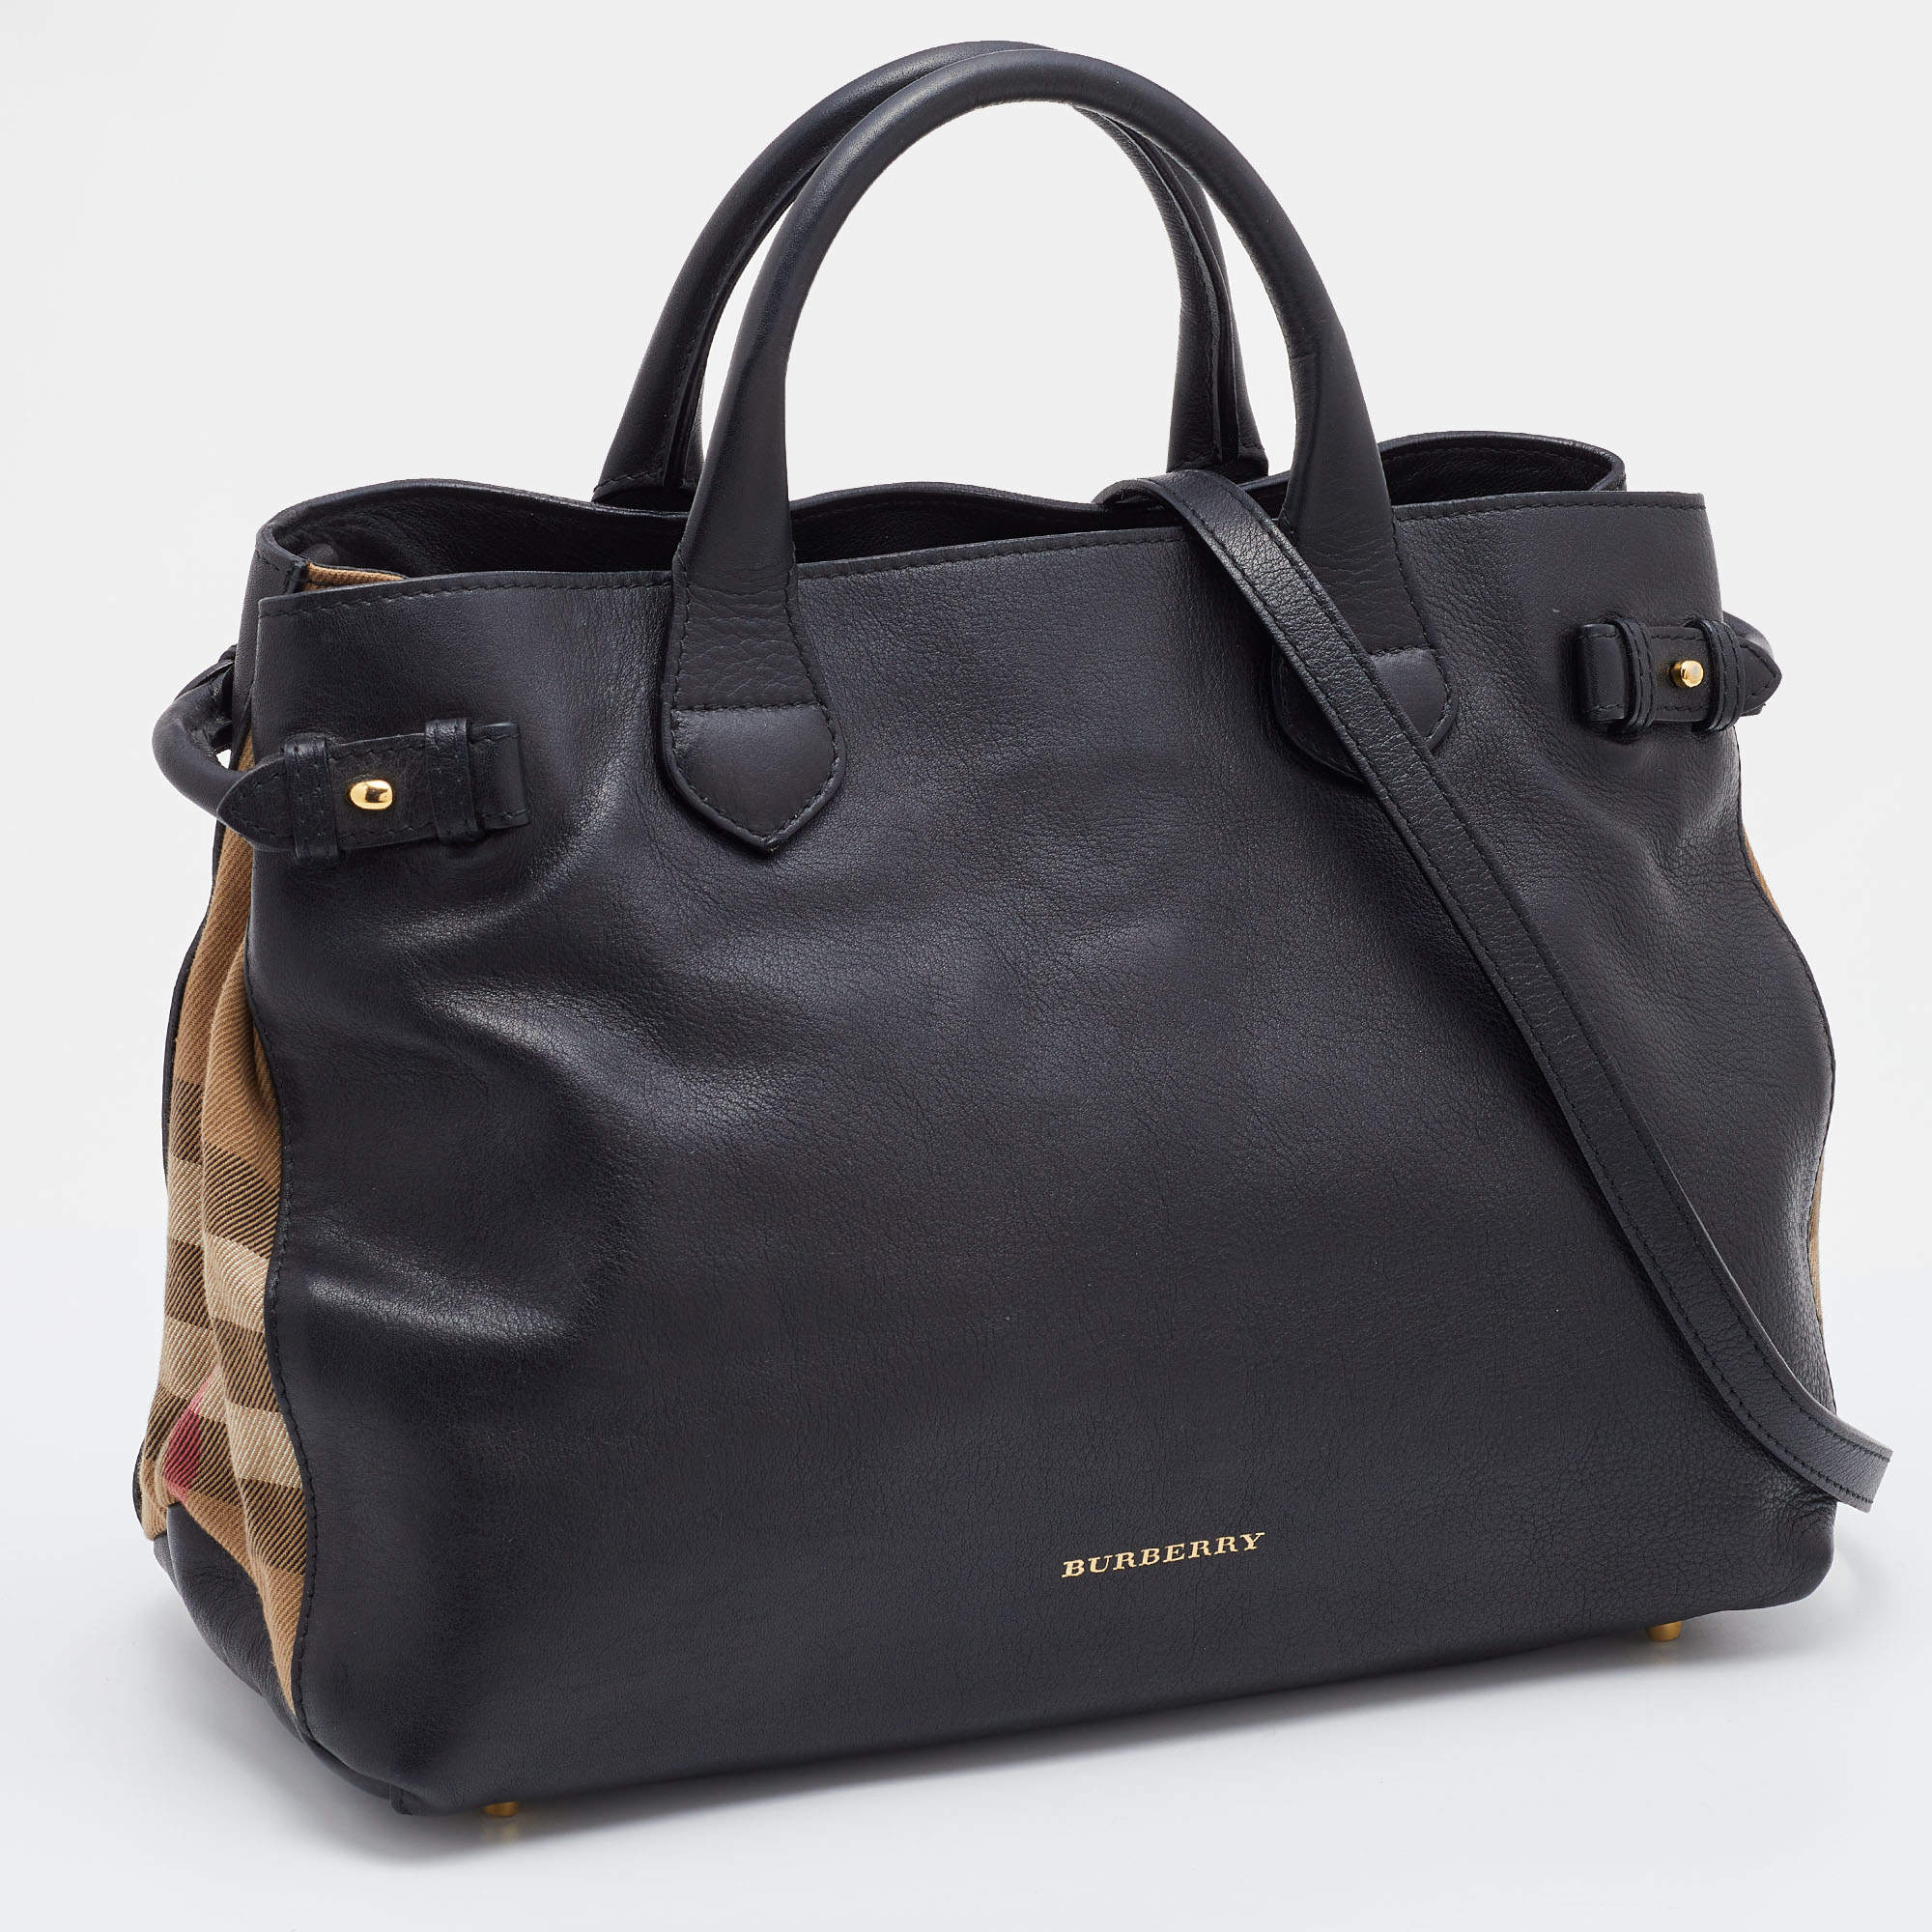 Burberry Handbag The Medium Banner Leather House Check Handbag - Black